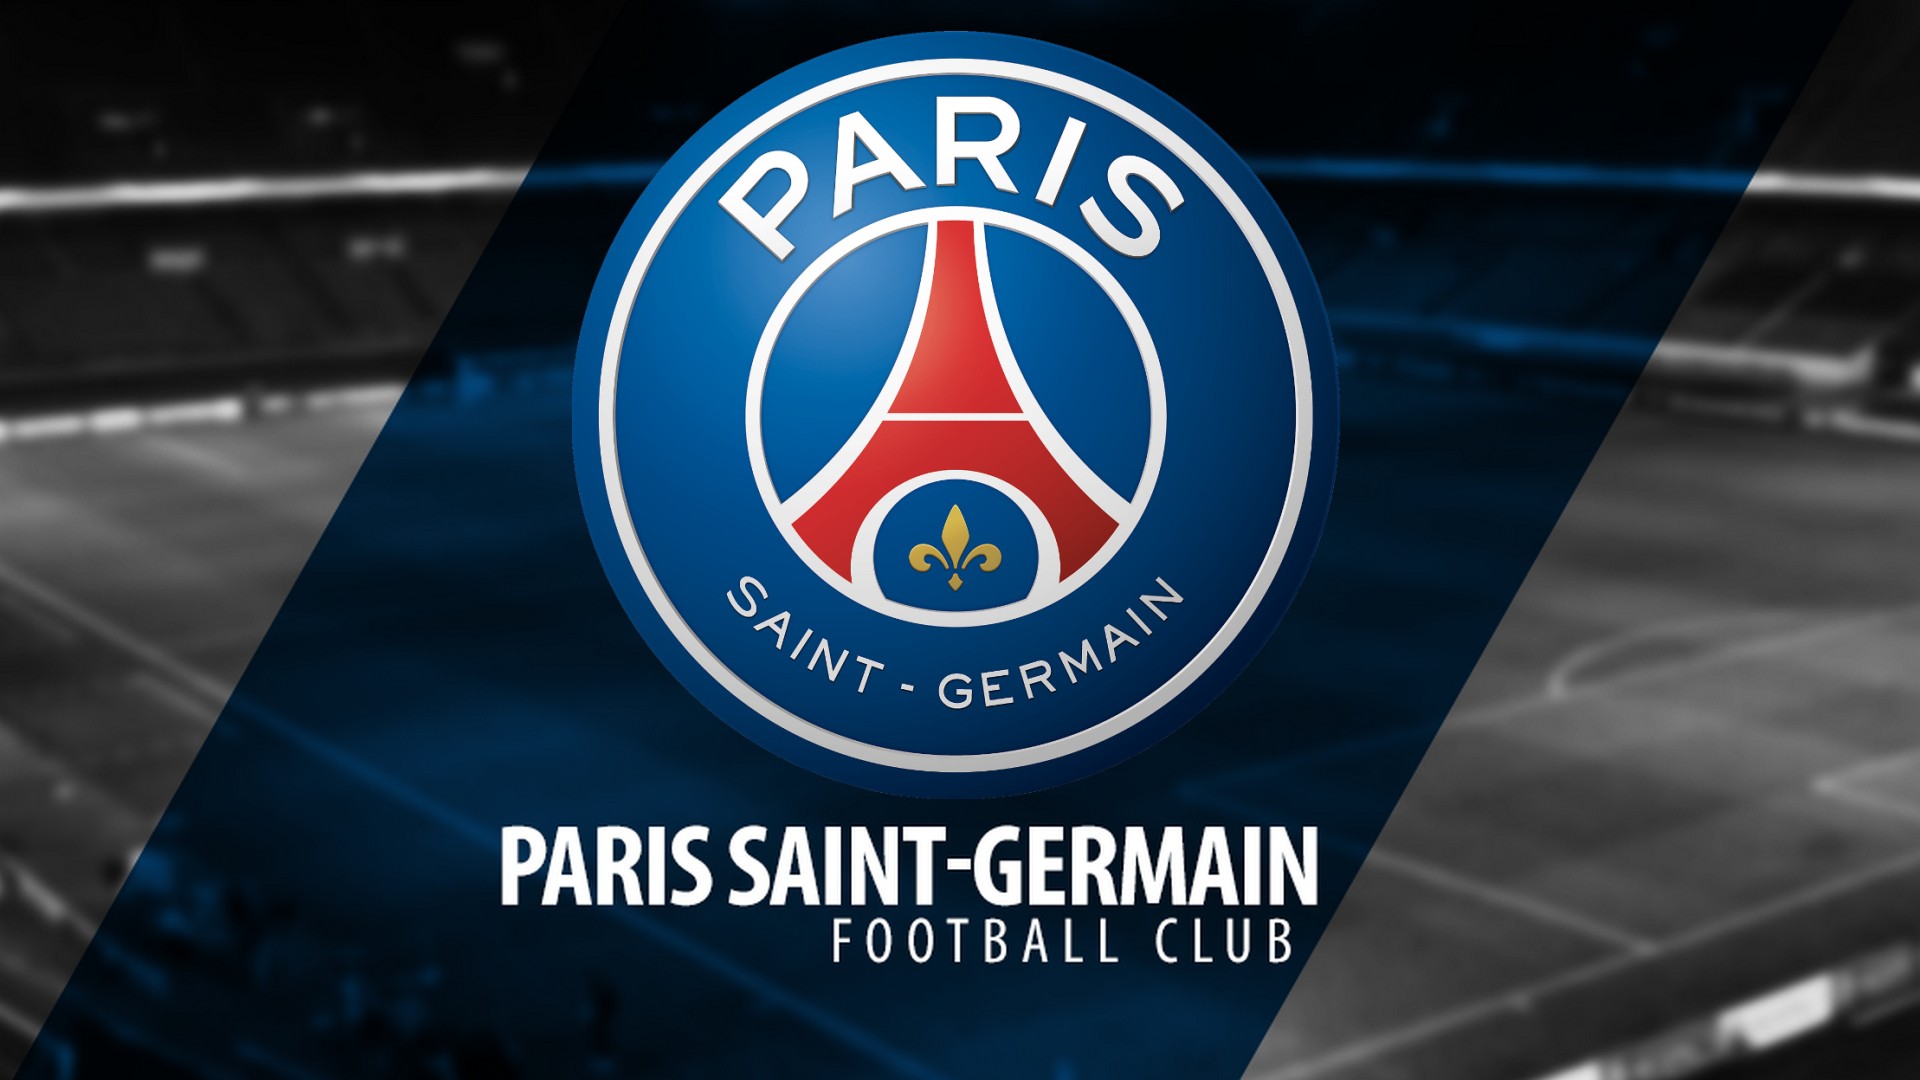 Paris Saint Germain Wallpaper Hd 2019 Football Wallpaper